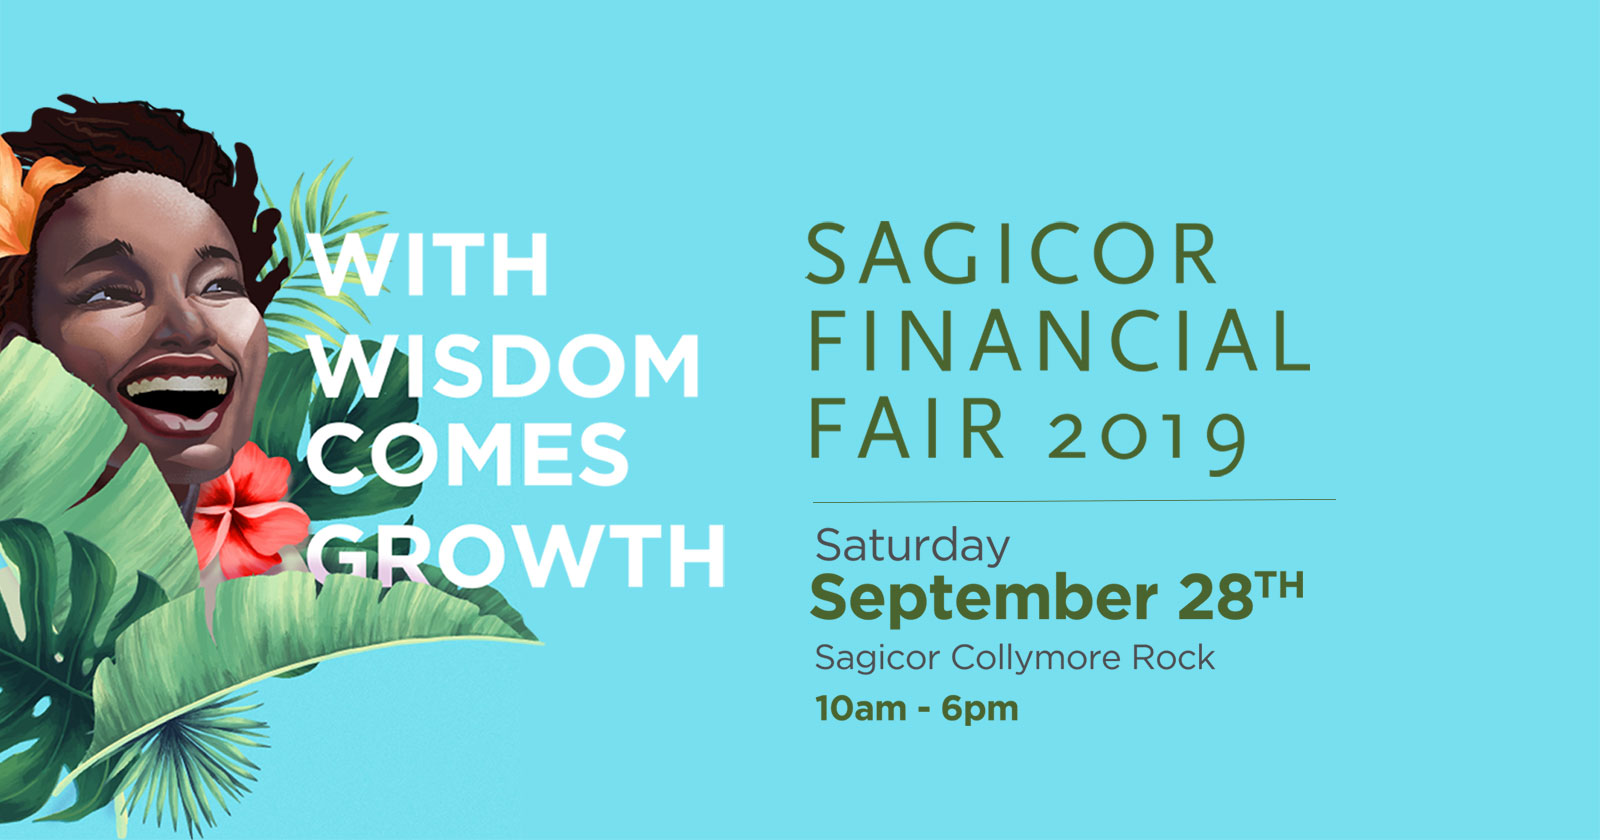 Sagicor Financial Fair